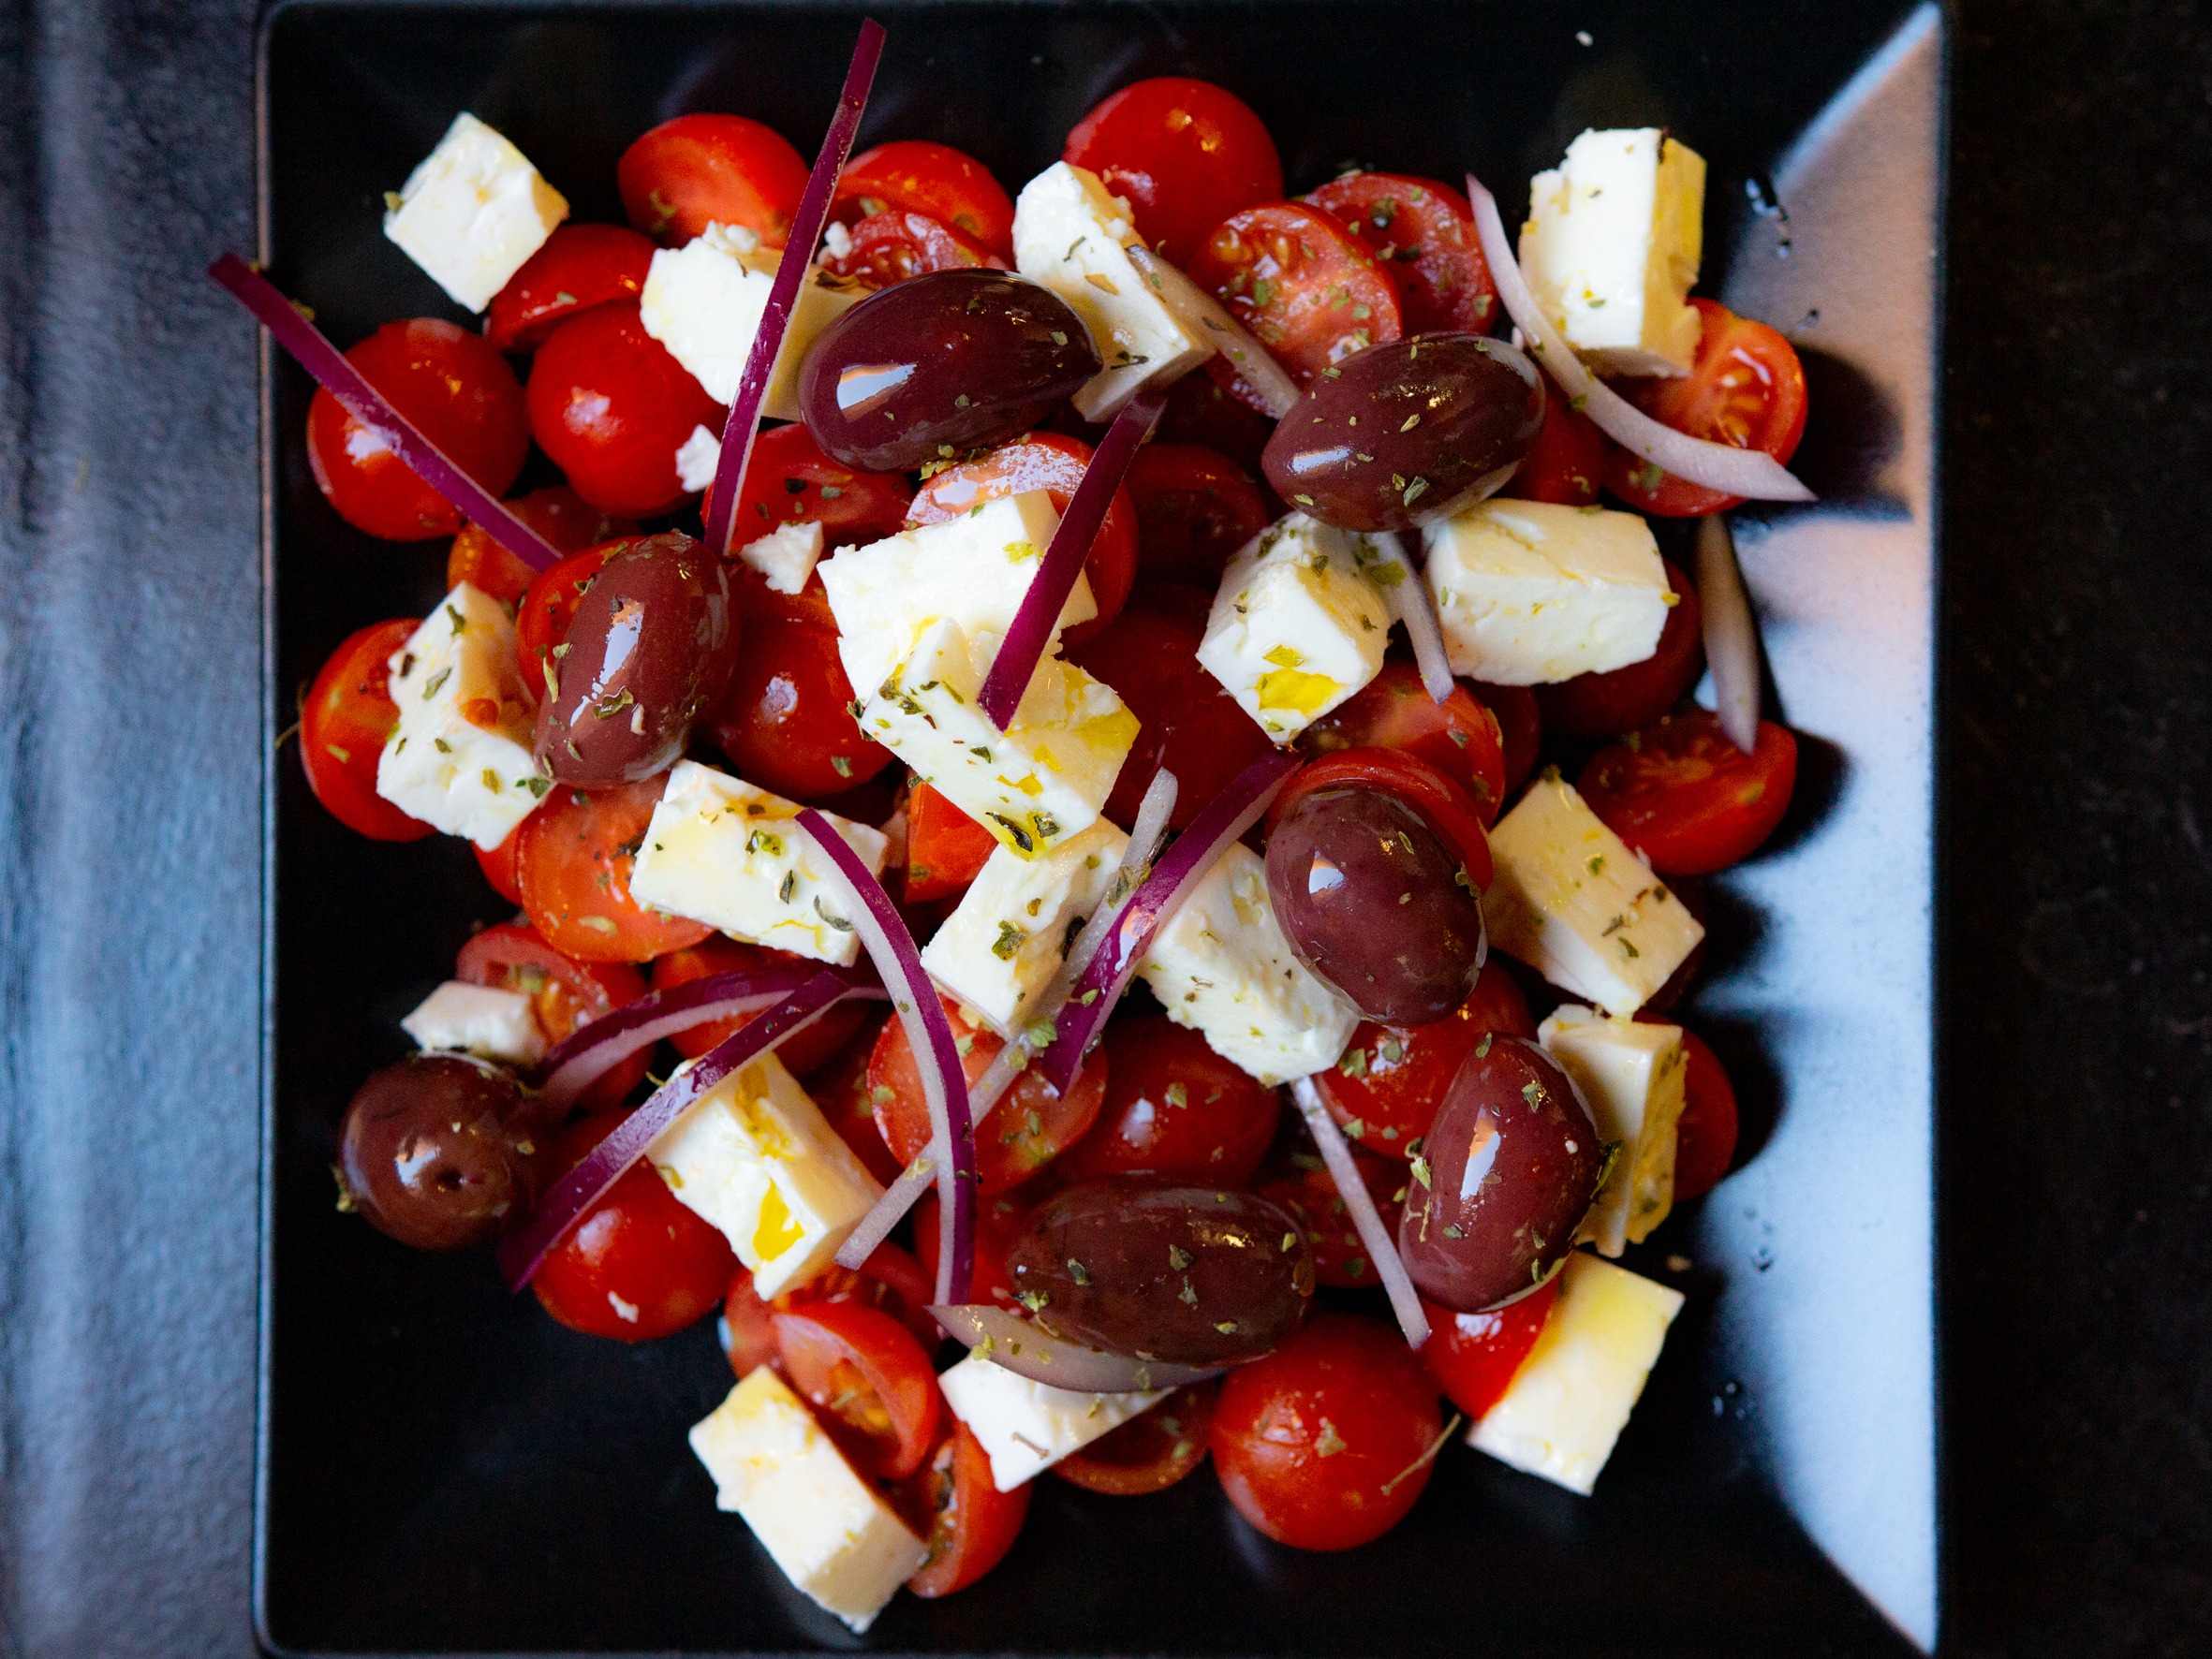 Cherry tomato salad with feta cheese